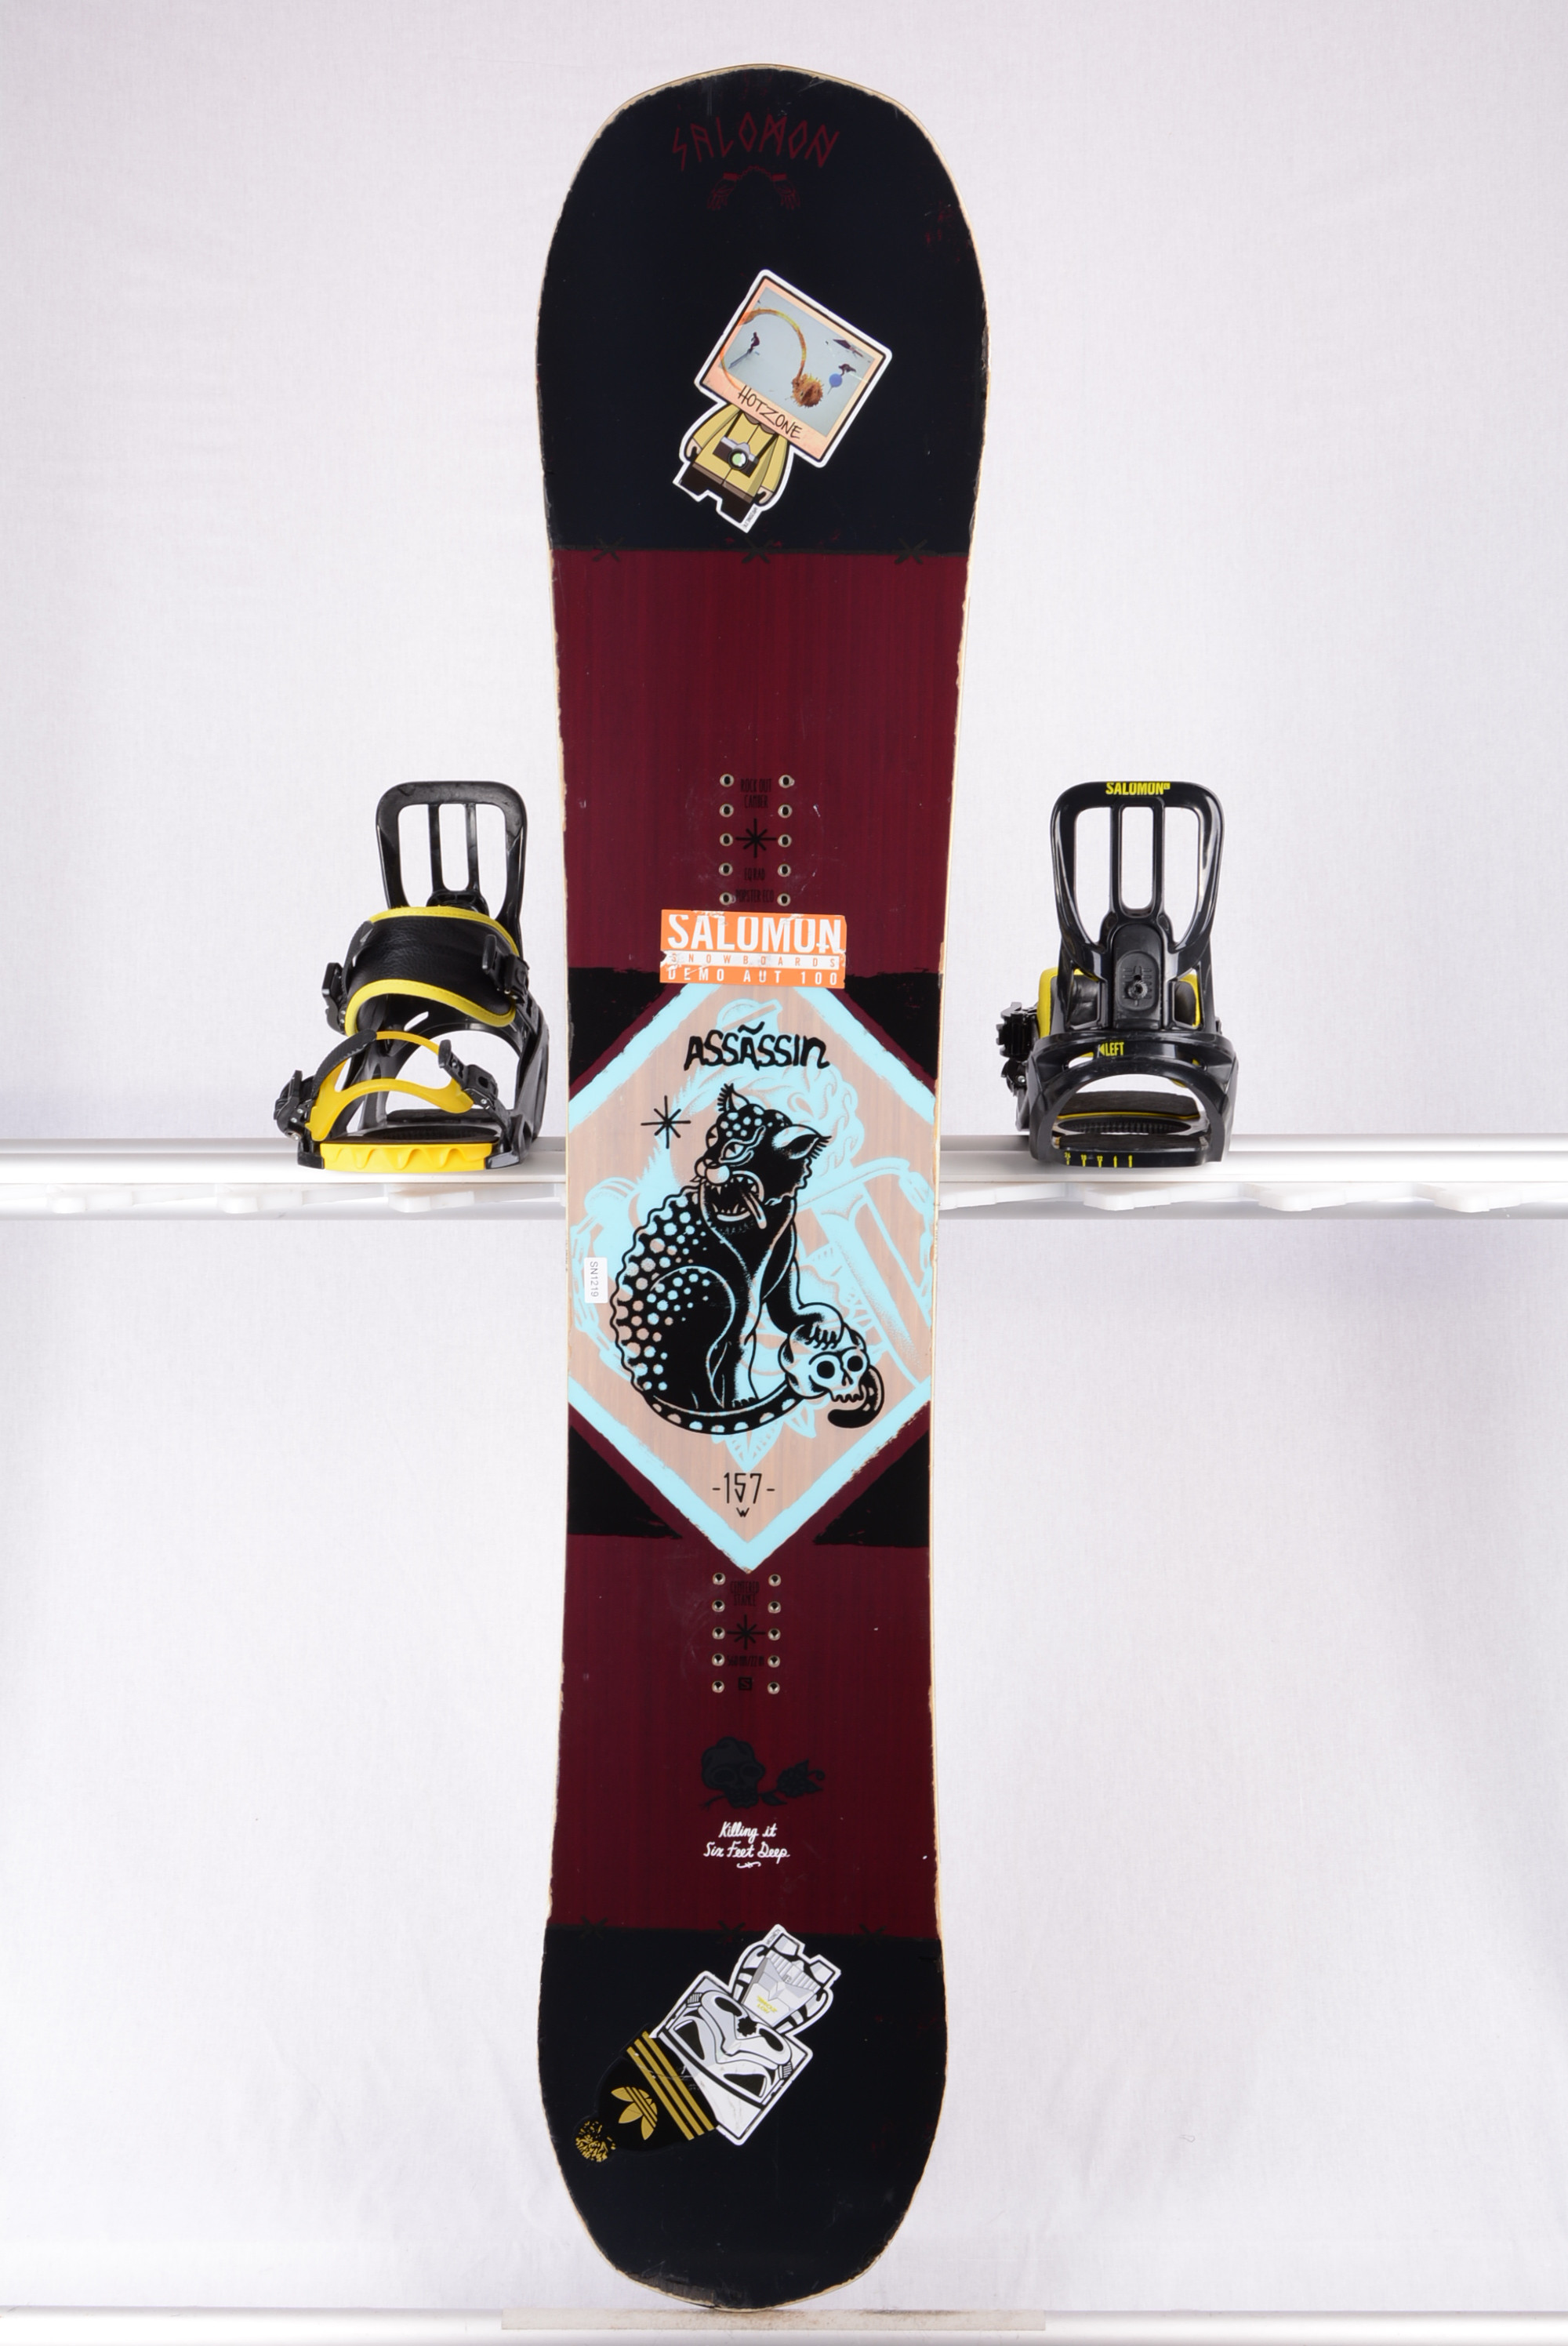 snowboard SALOMON ASSASSIN WIDE, WOODCORE, sidewall, HYBRID/camber